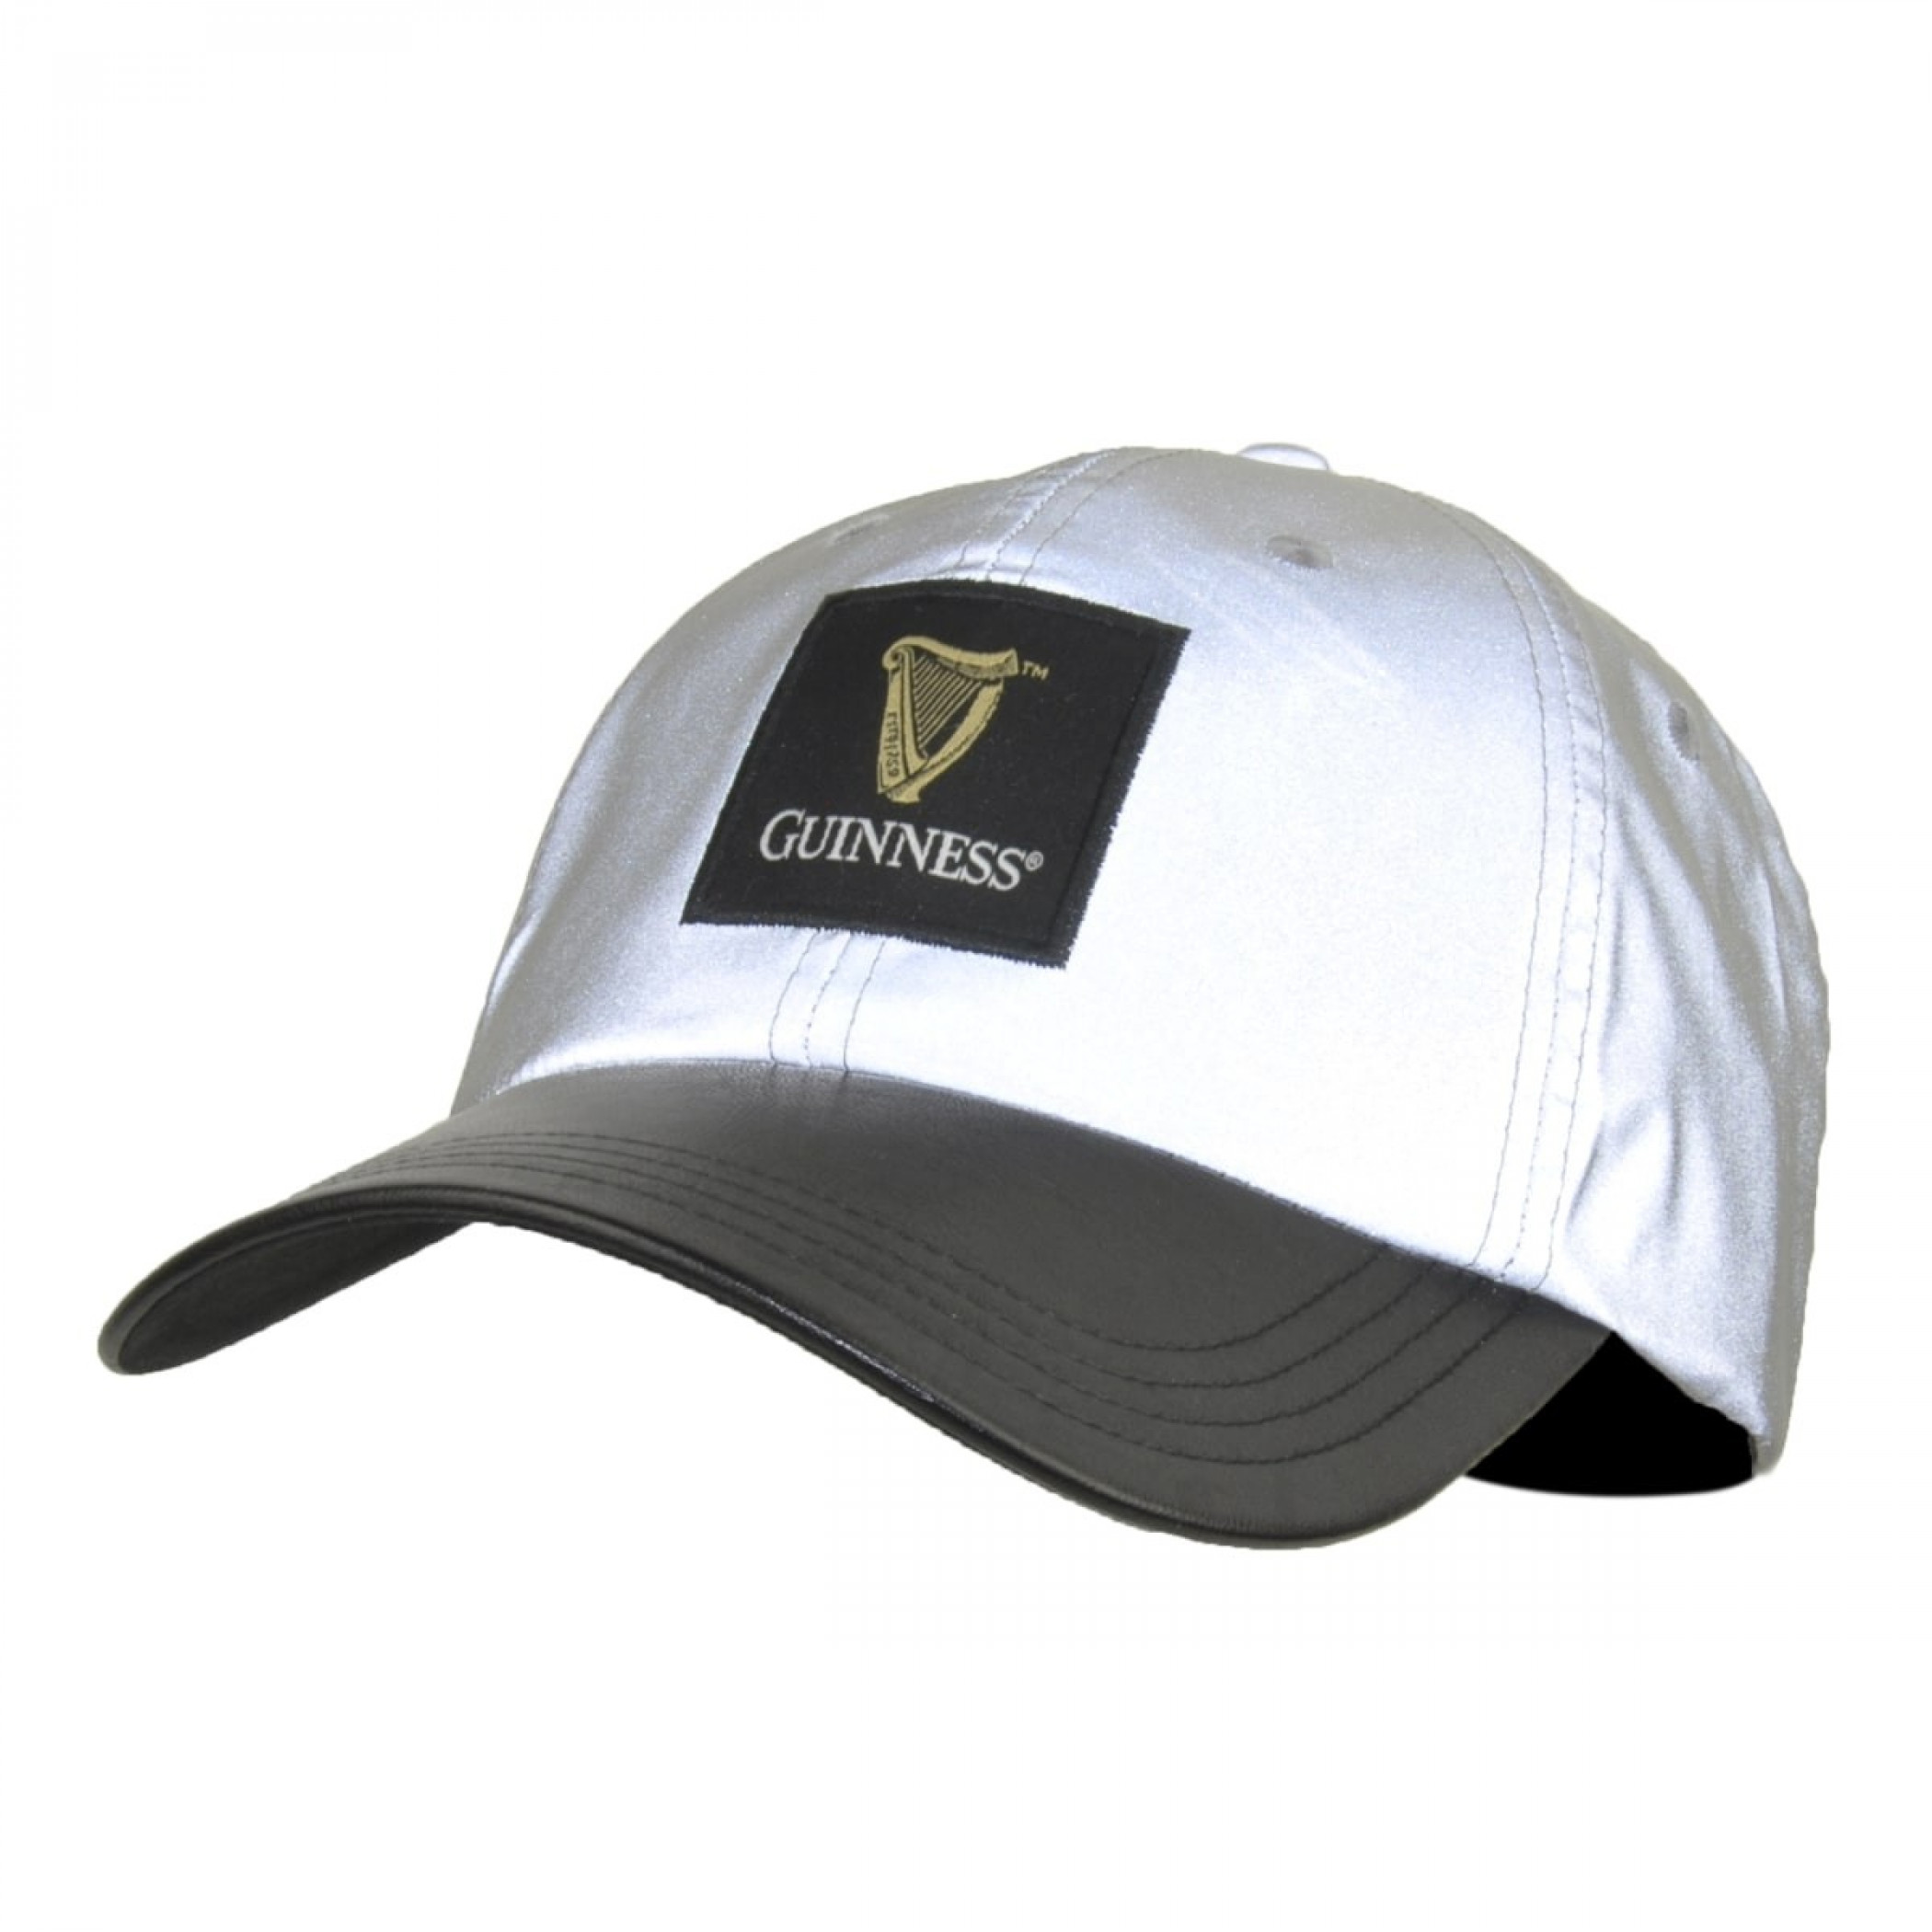 Guinness Reflective Adjustable Cap